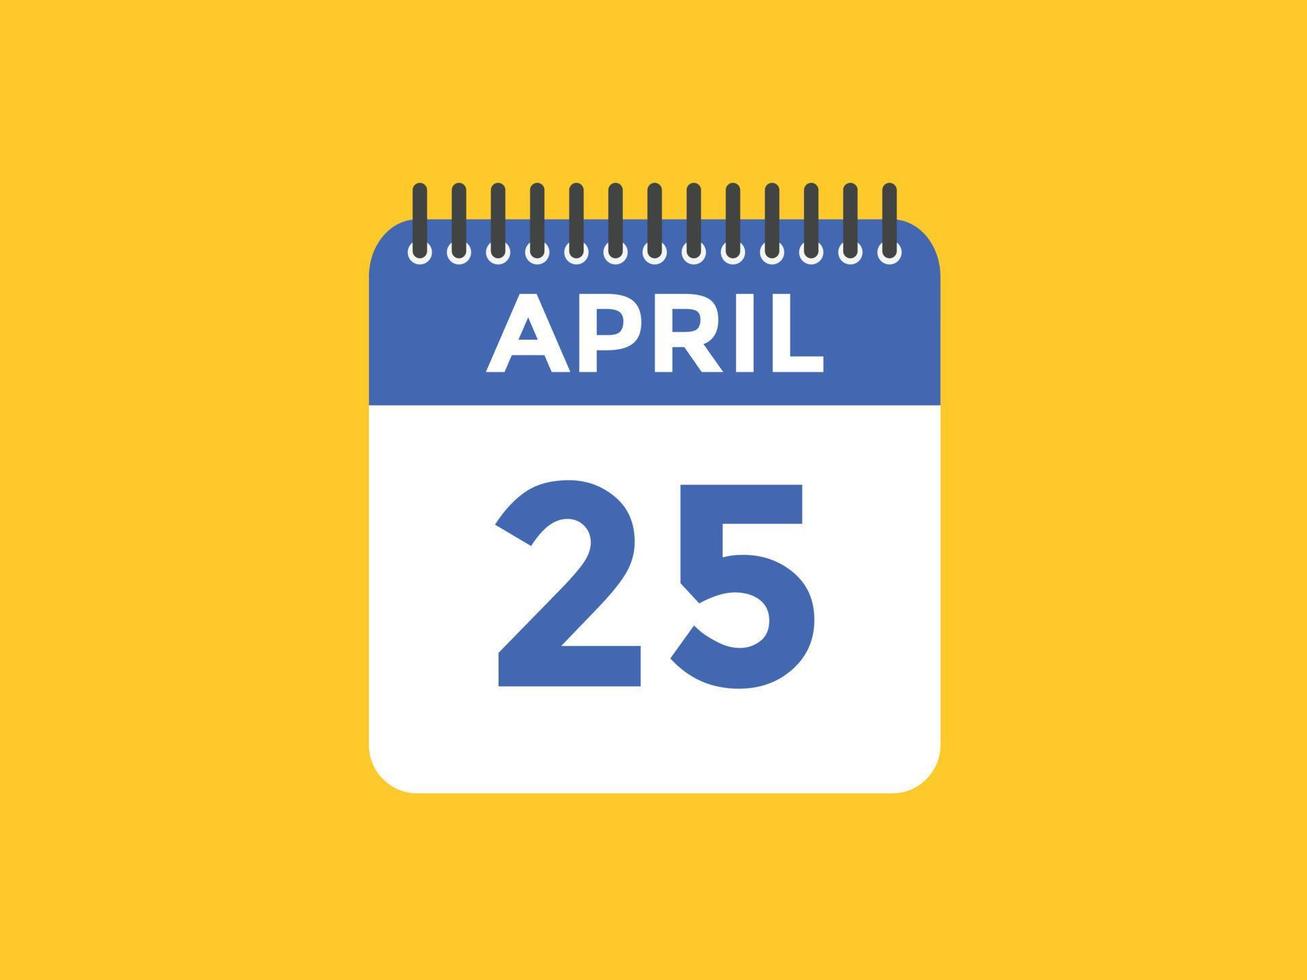 april 25 kalender påminnelse. 25:e april dagligen kalender ikon mall. kalender 25:e april ikon design mall. vektor illustration